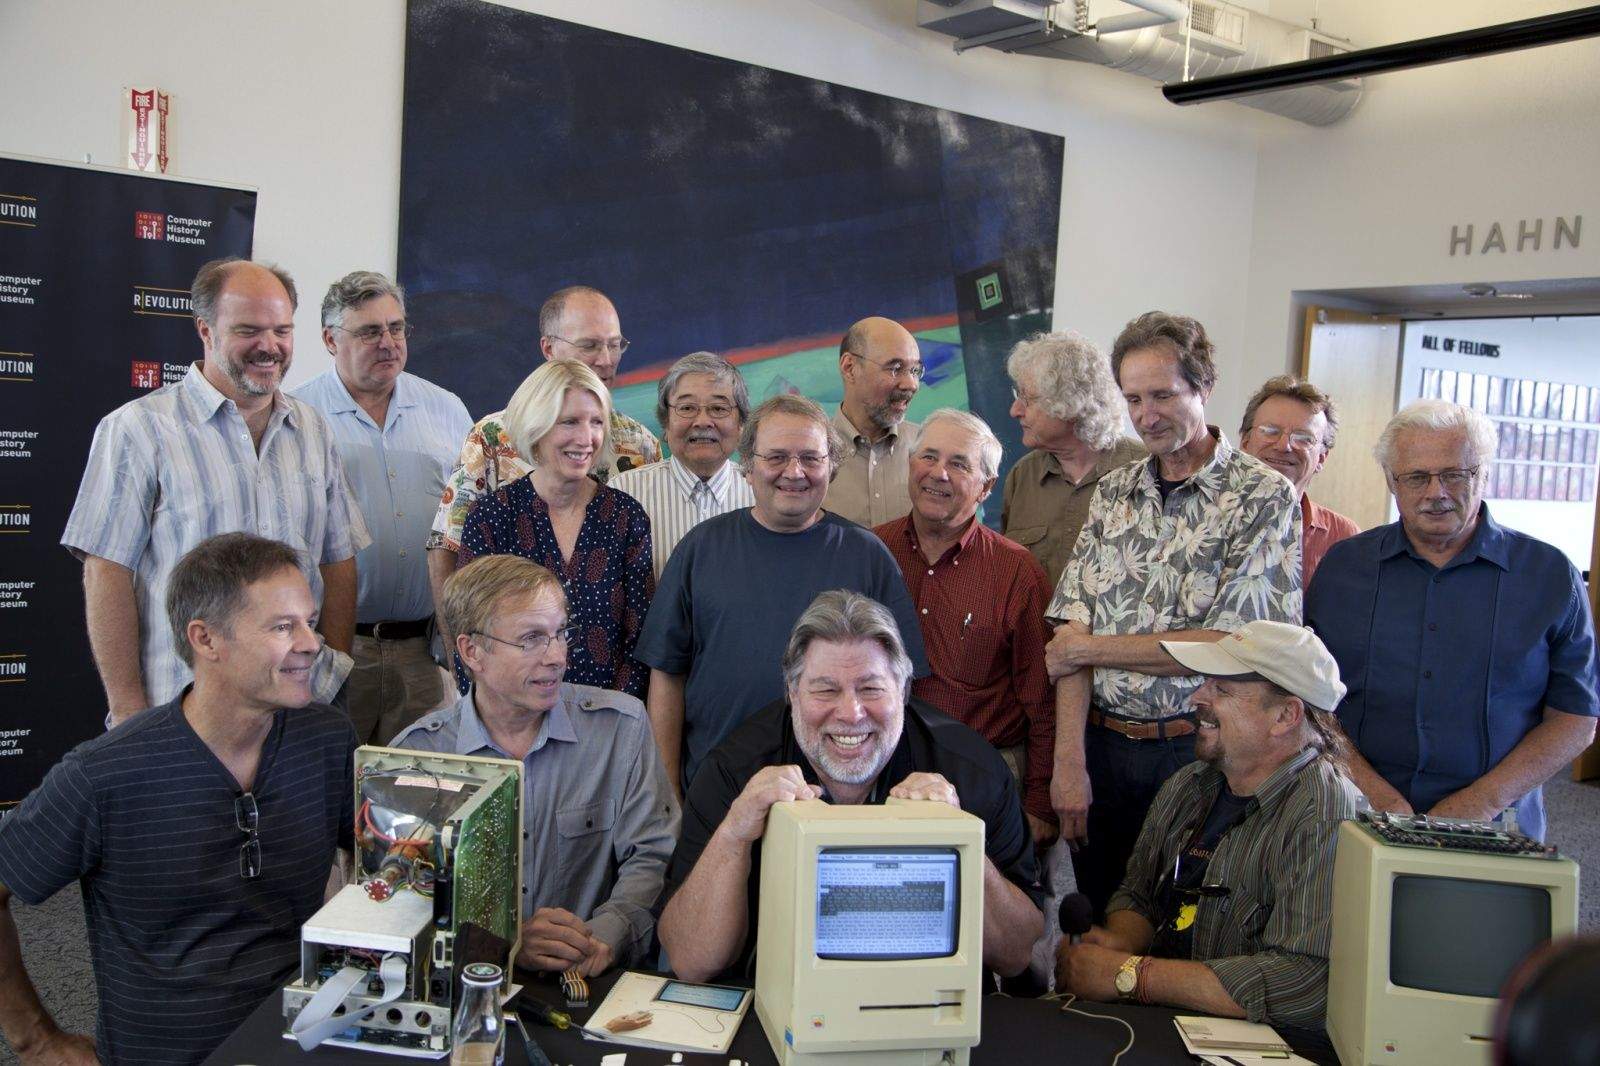 Early Apple Employee Reunion Celebrates the Twiggy Mac Resurrection 